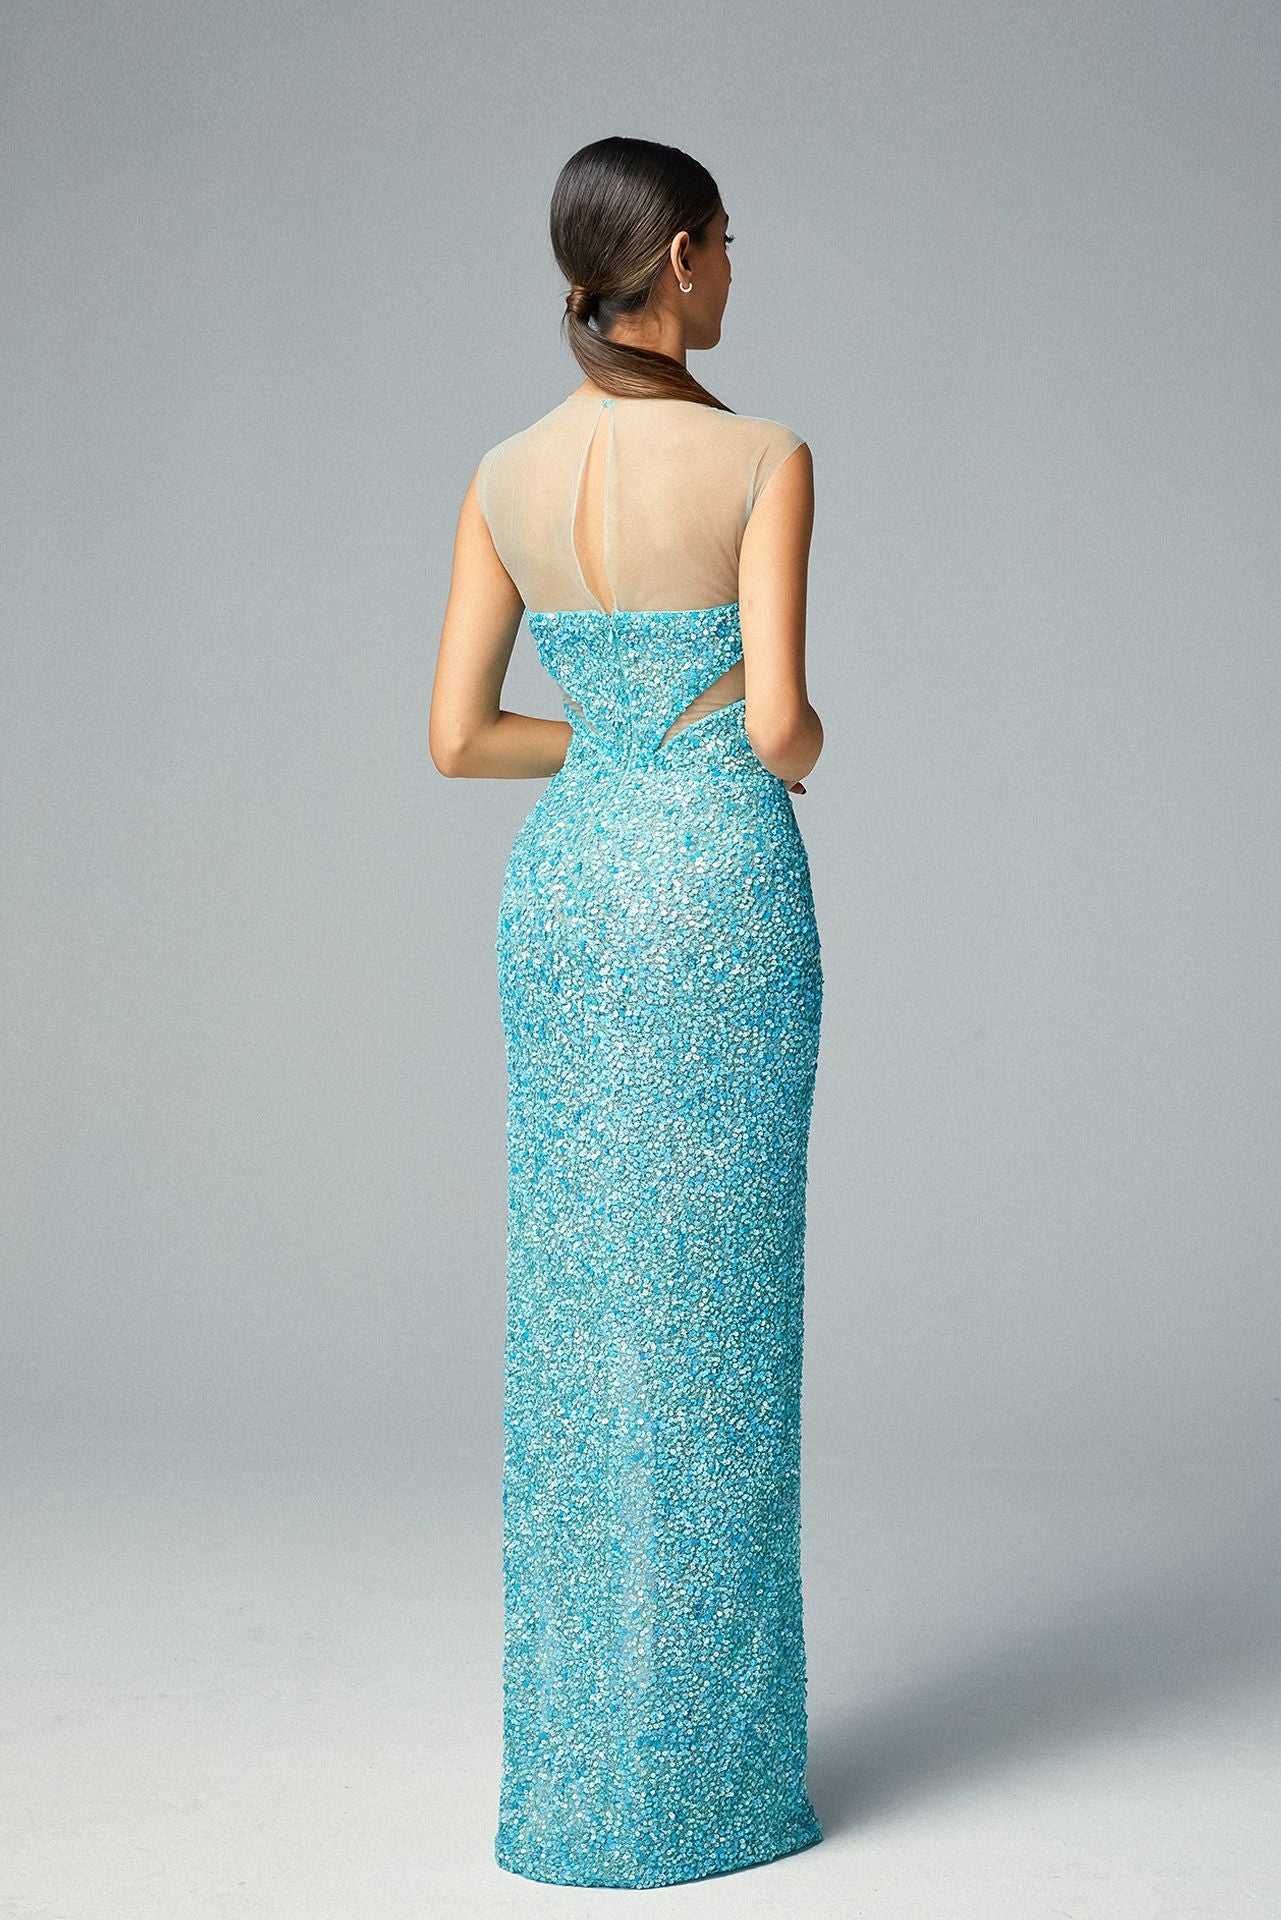 Aqua Dress With Long Sleeves Elegant Evening Maxi Dress : Joy | Etsy